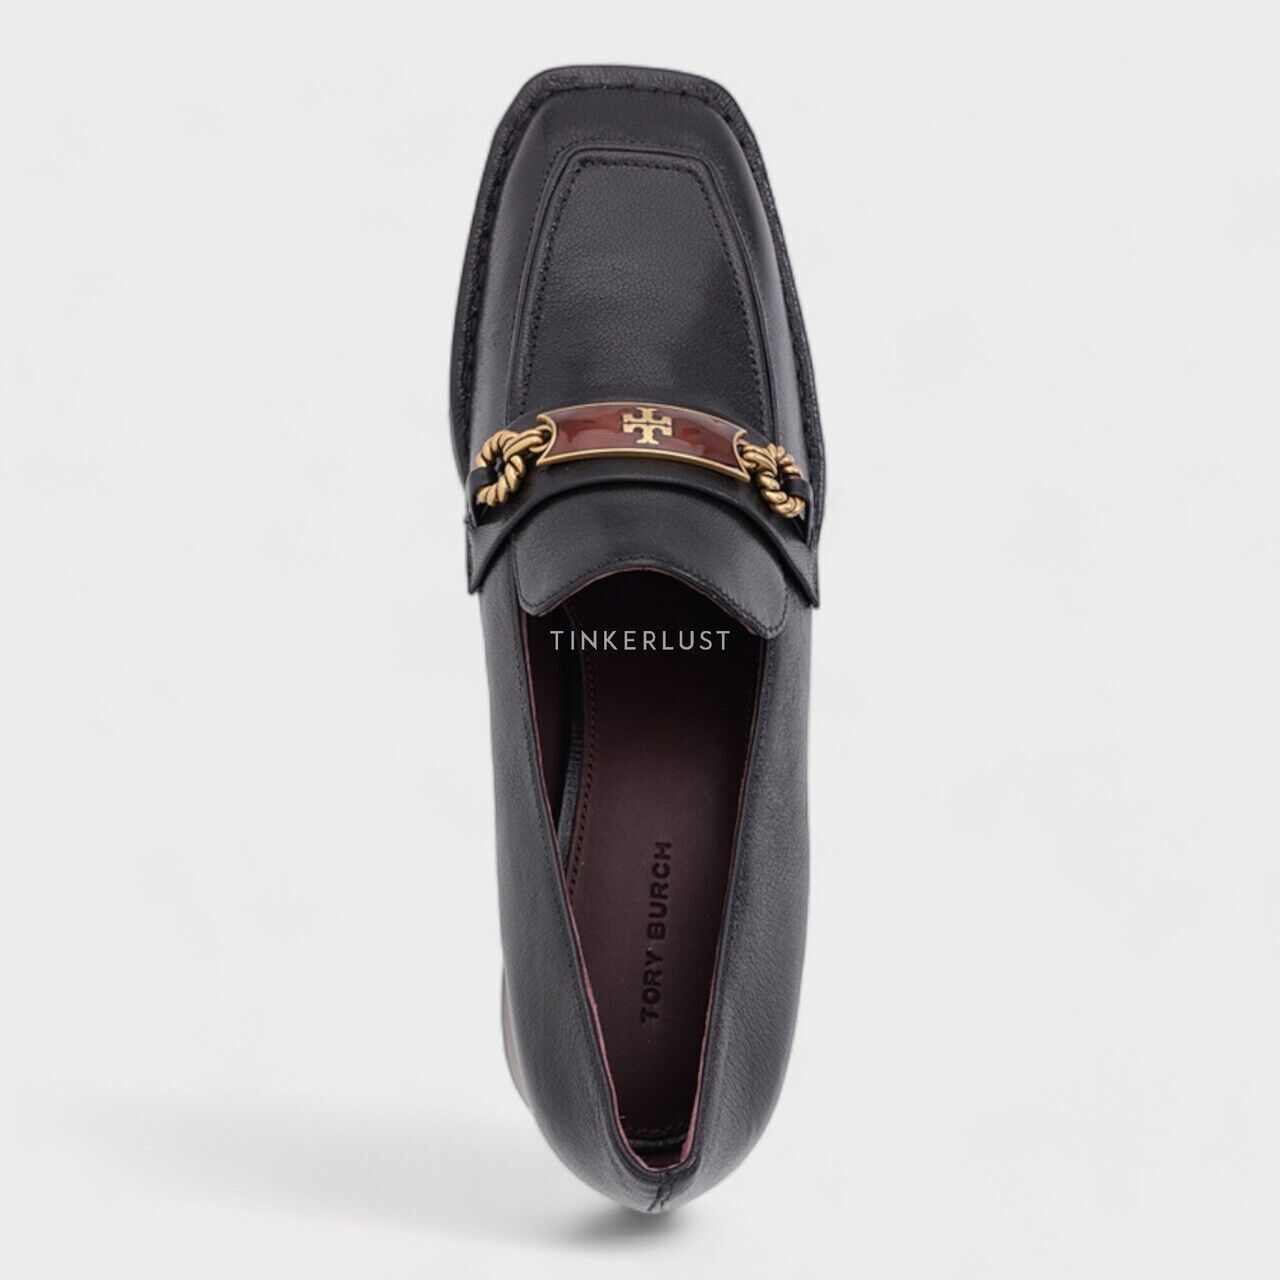 Tory Burch Perrine 55mm Perfect Black Loafer Heels